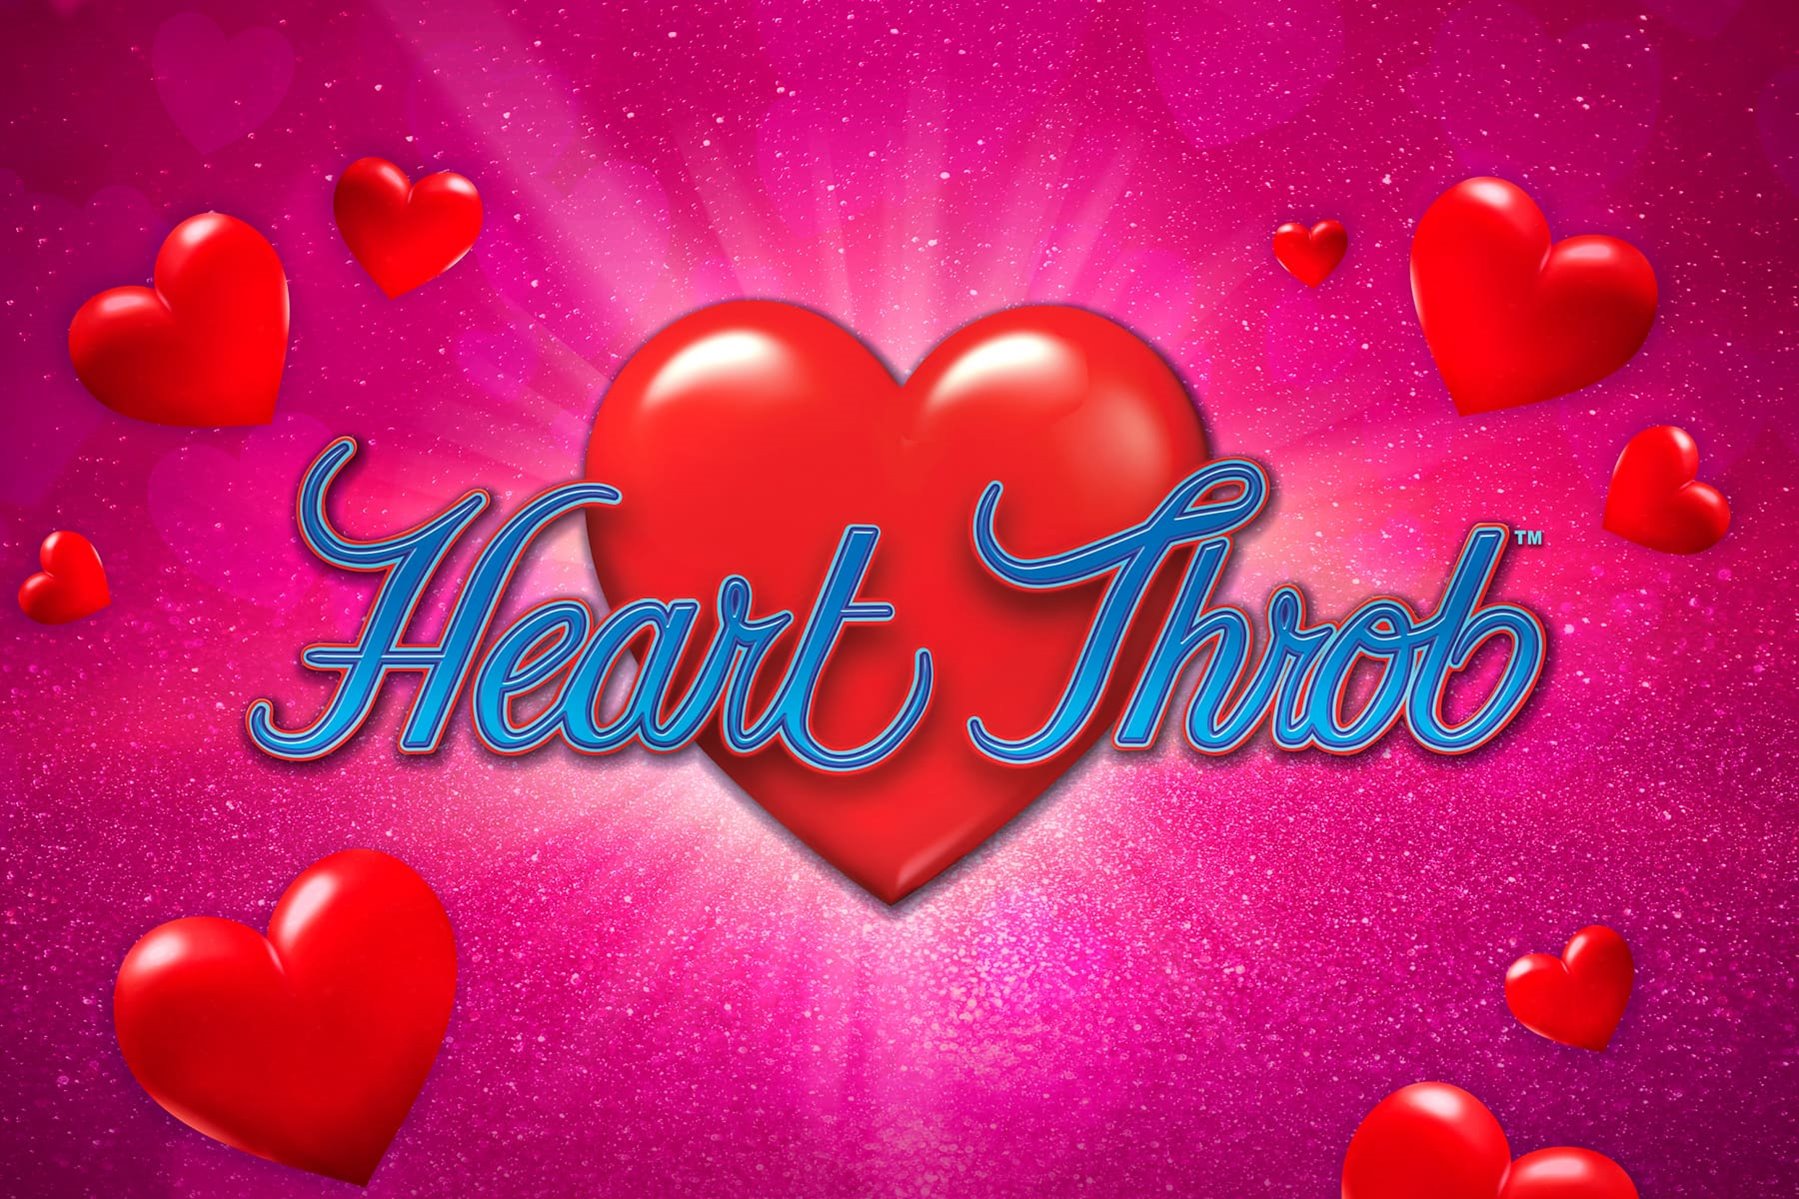 Heart Throb at the Casino - Crown Perth